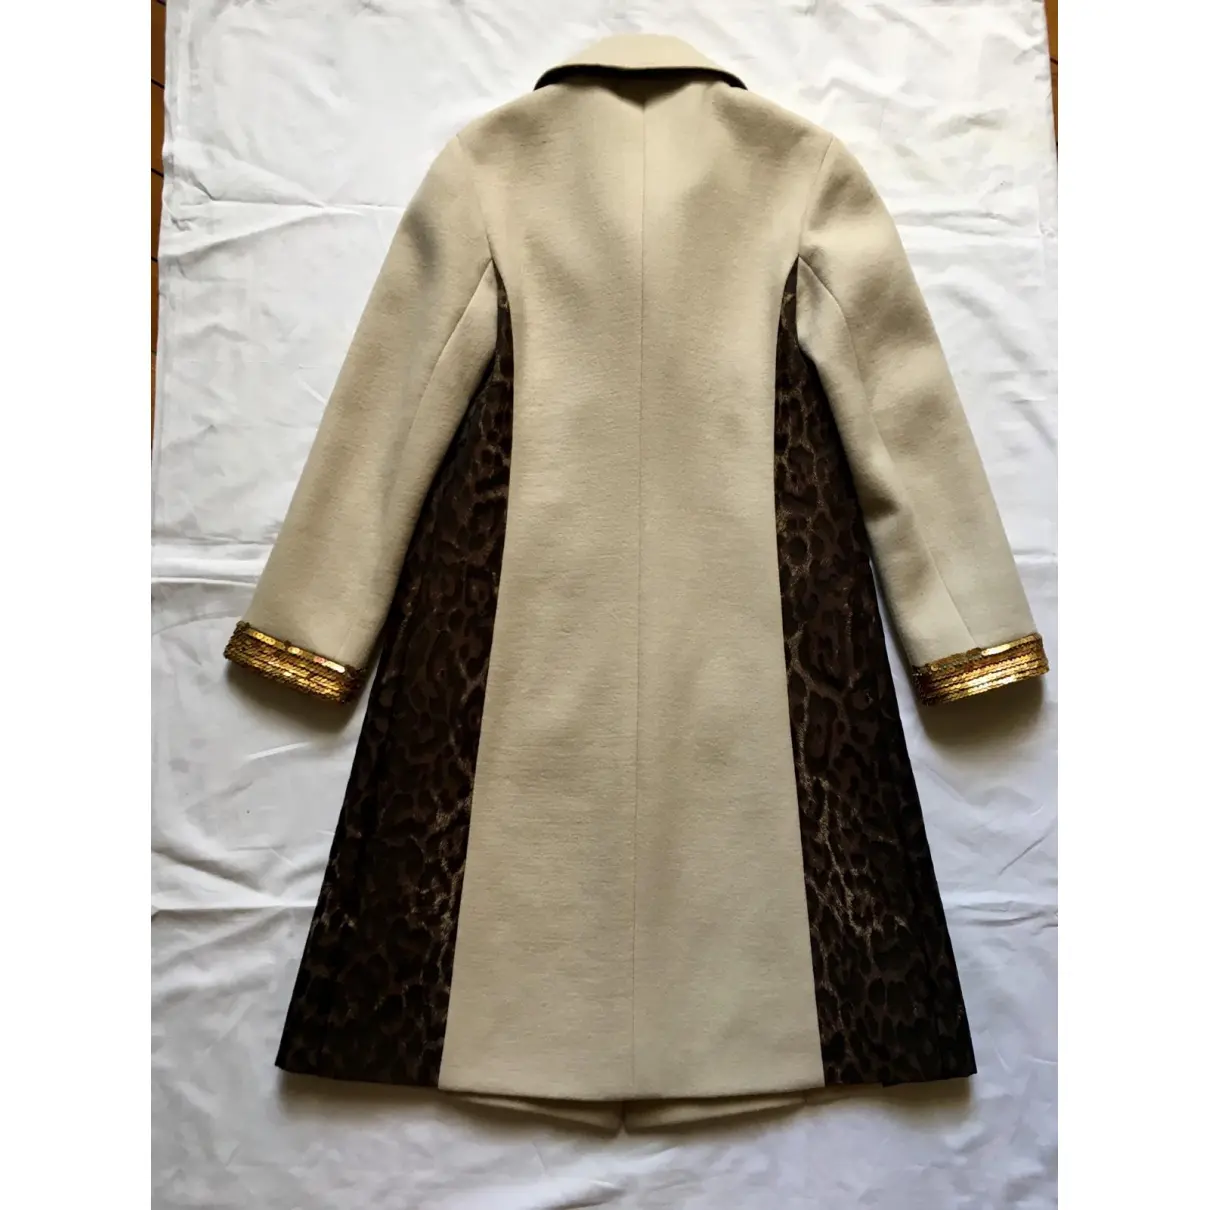 Buy Pollini Wool coat online